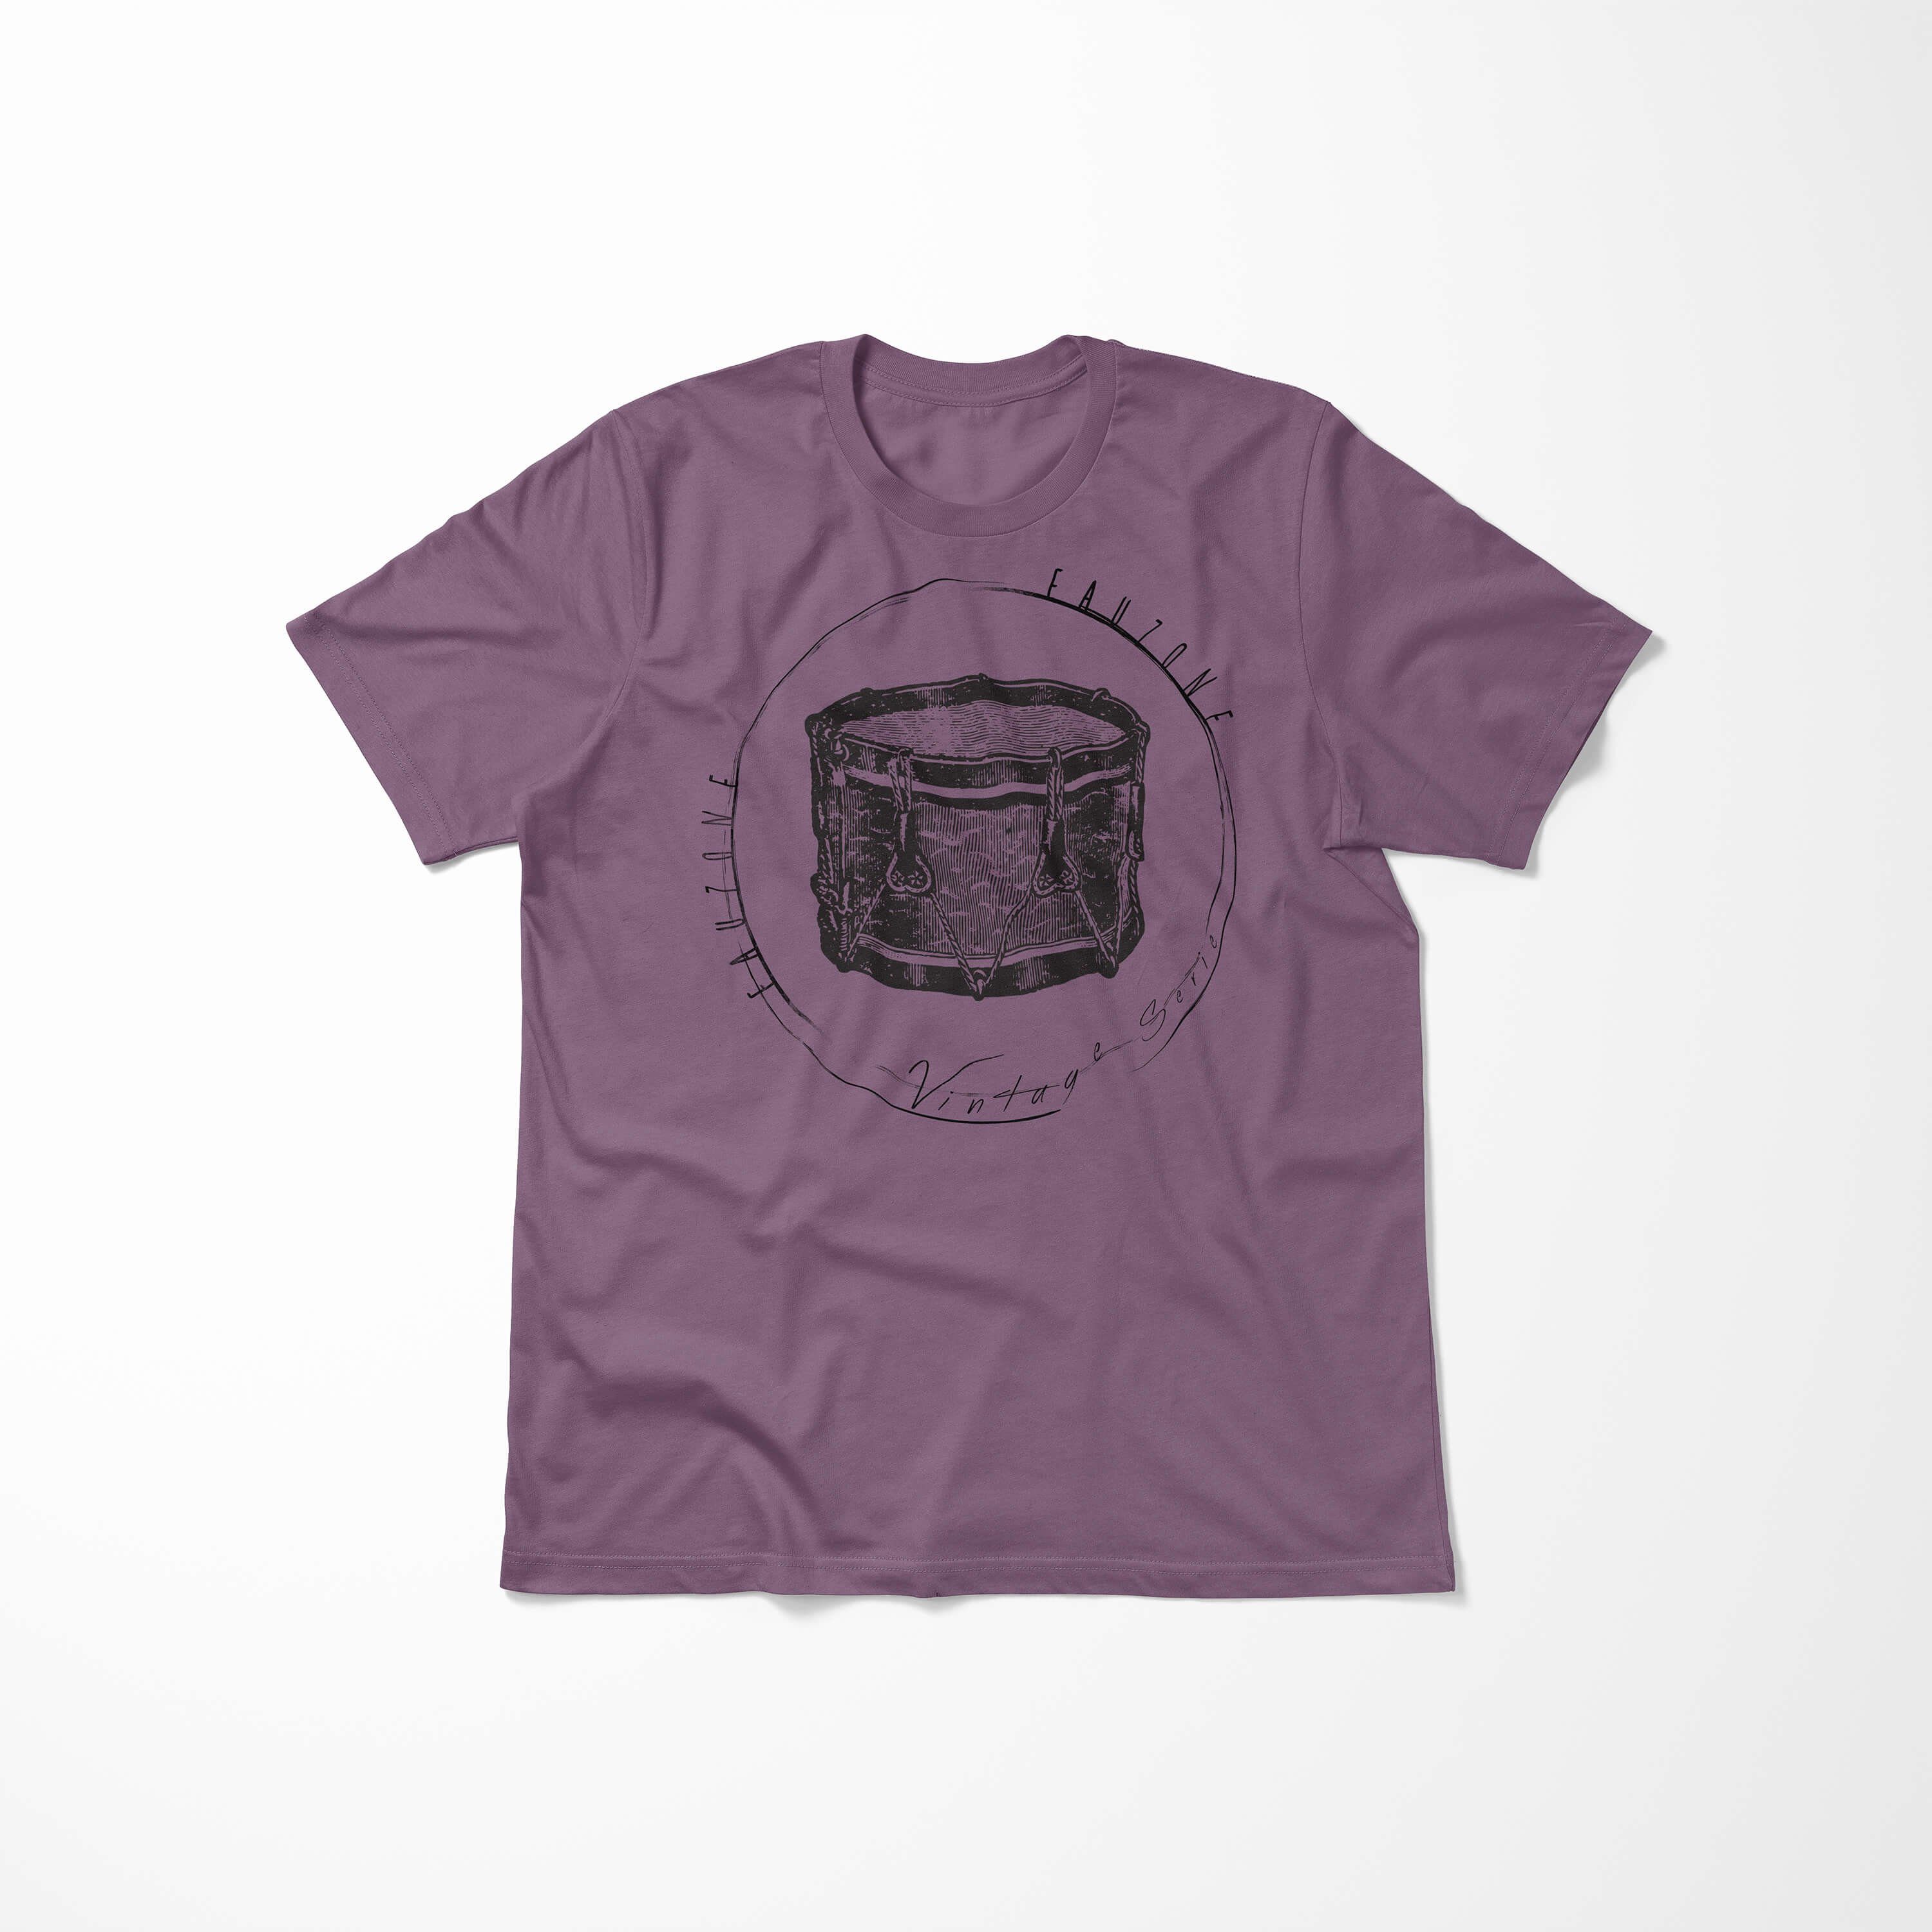 Sinus Art Trommel T-Shirt Shiraz Vintage T-Shirt Herren